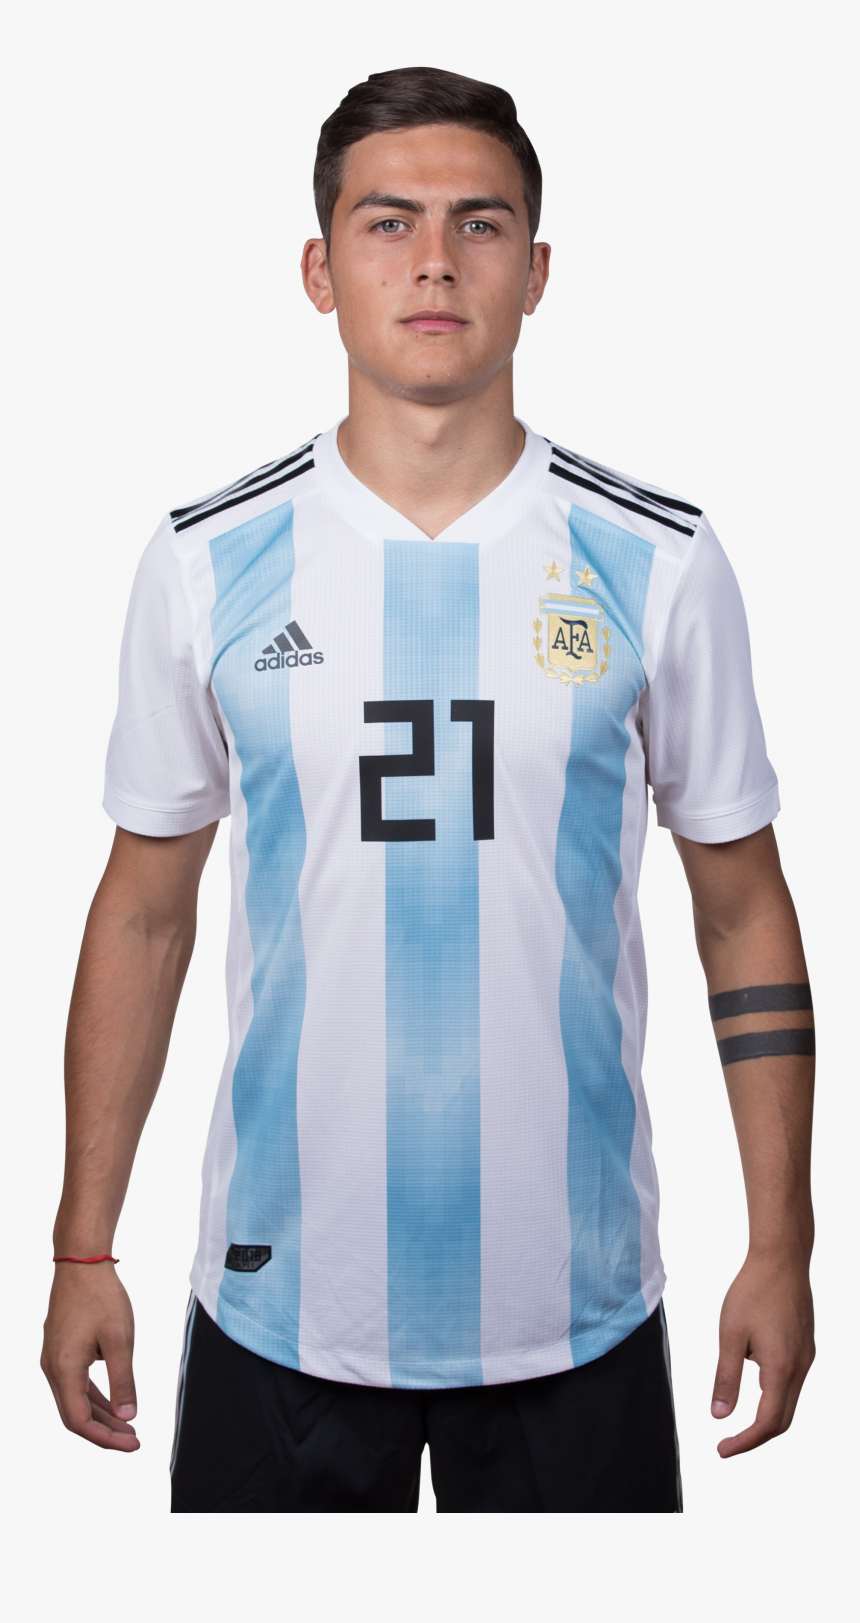 paulo dybala argentina jersey